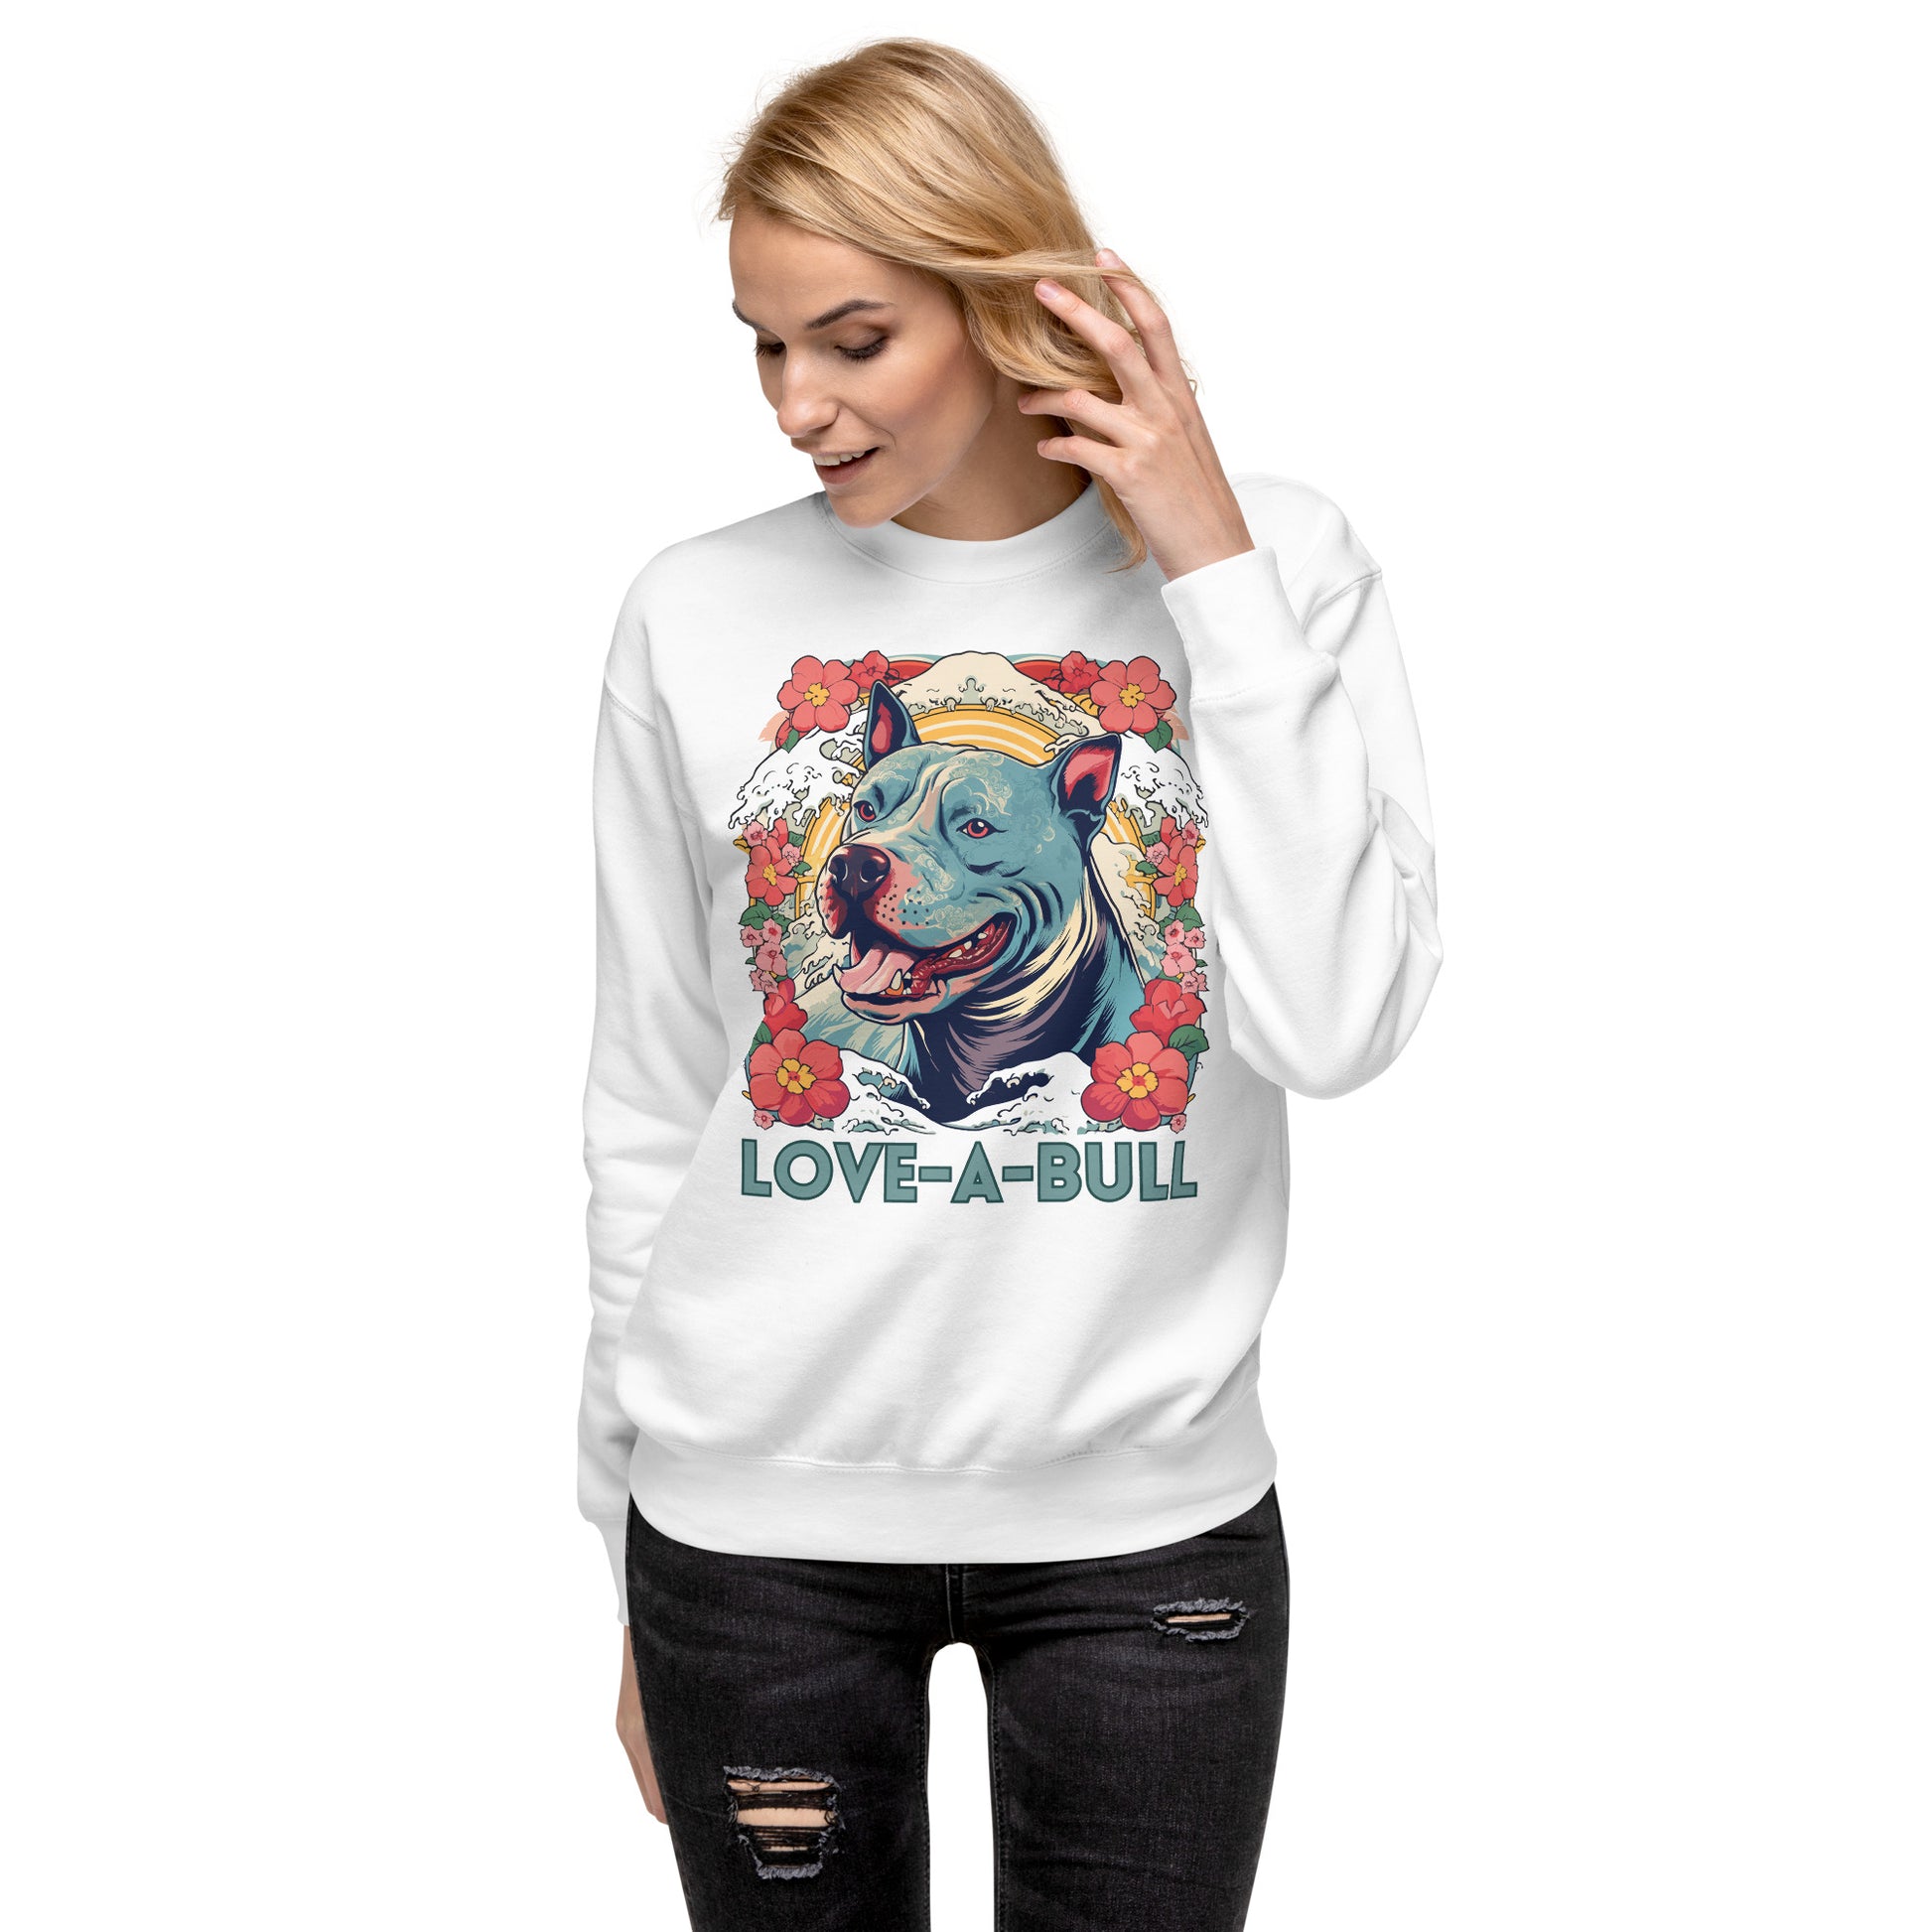 "Love-A-Bull" Floral Pitbull Sweatshirt - Pittie Choy